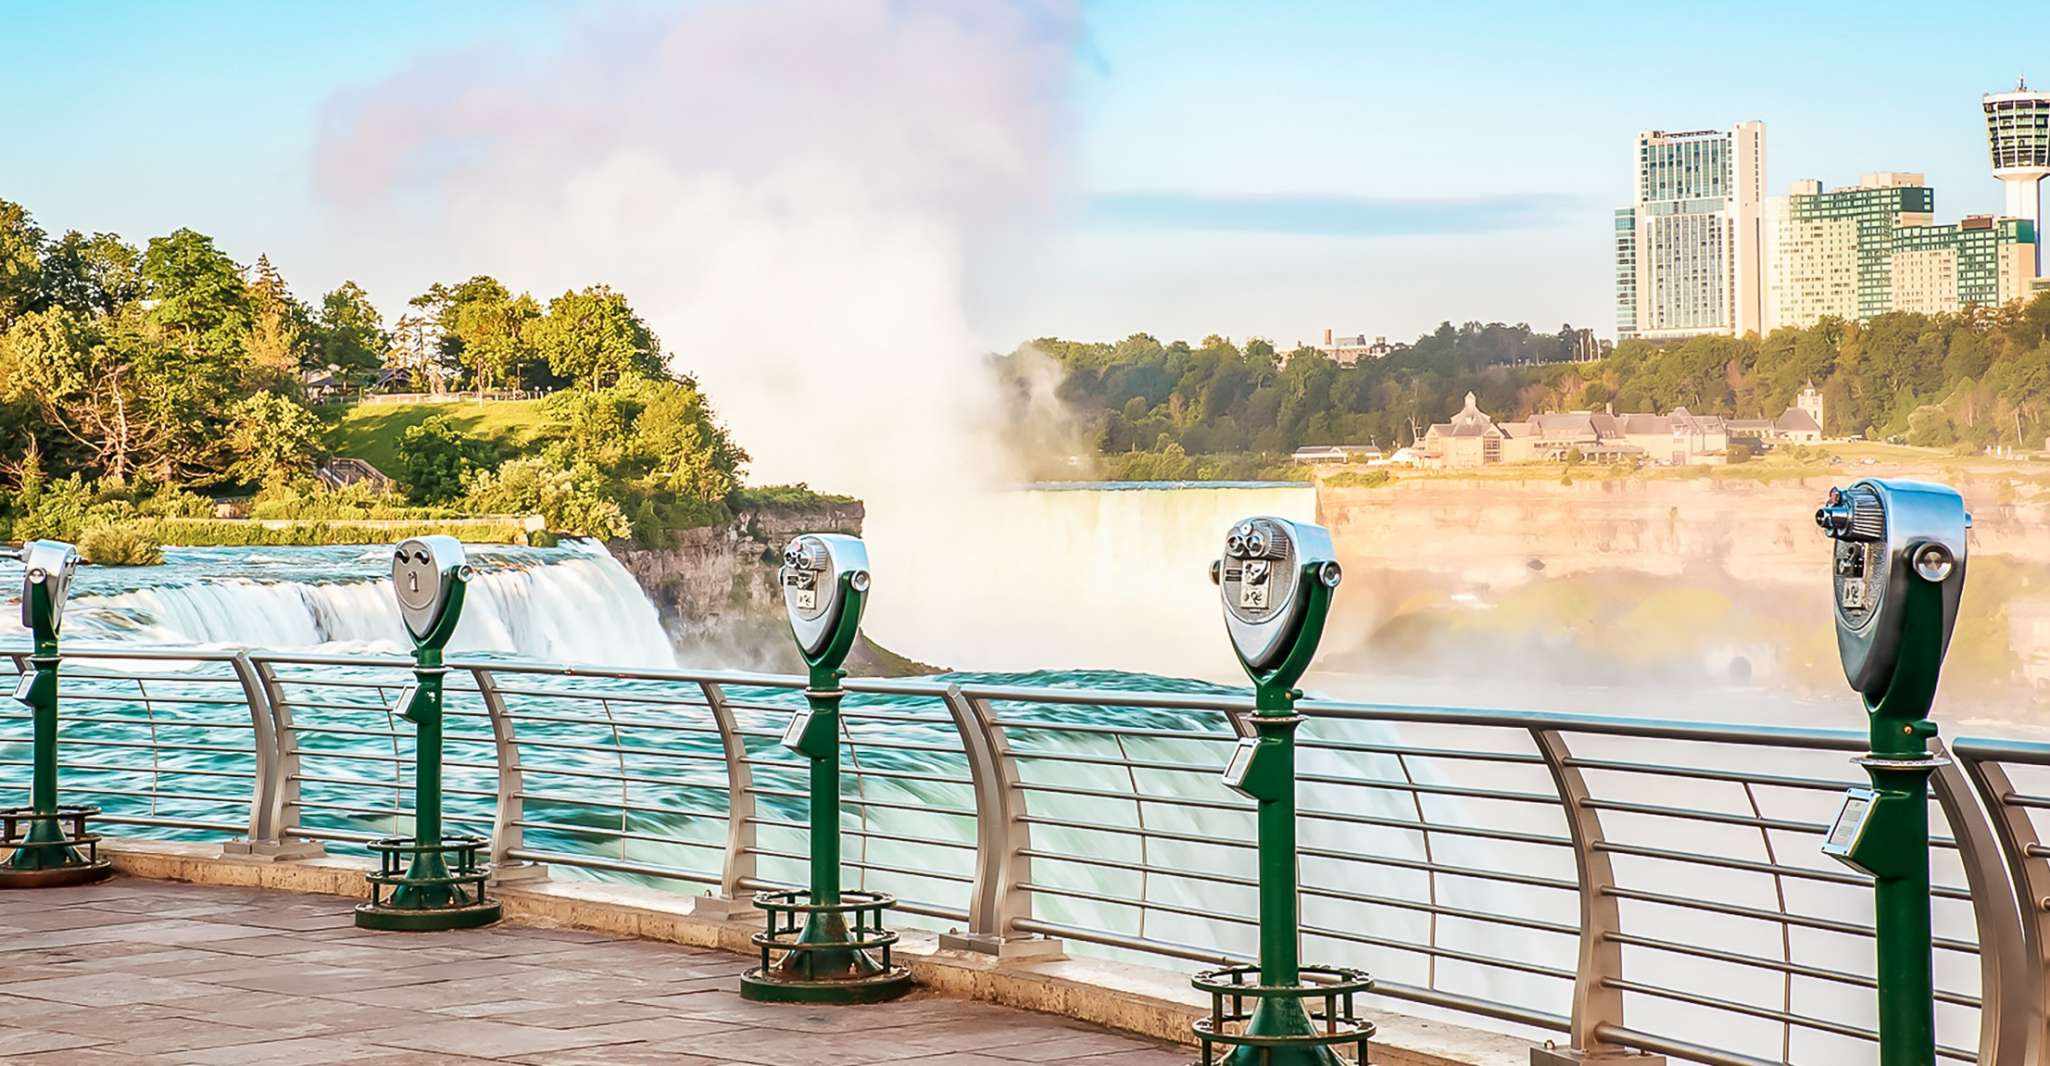 Niagara Falls, Canada, Boat Tour & Journey Behind the Falls - Housity